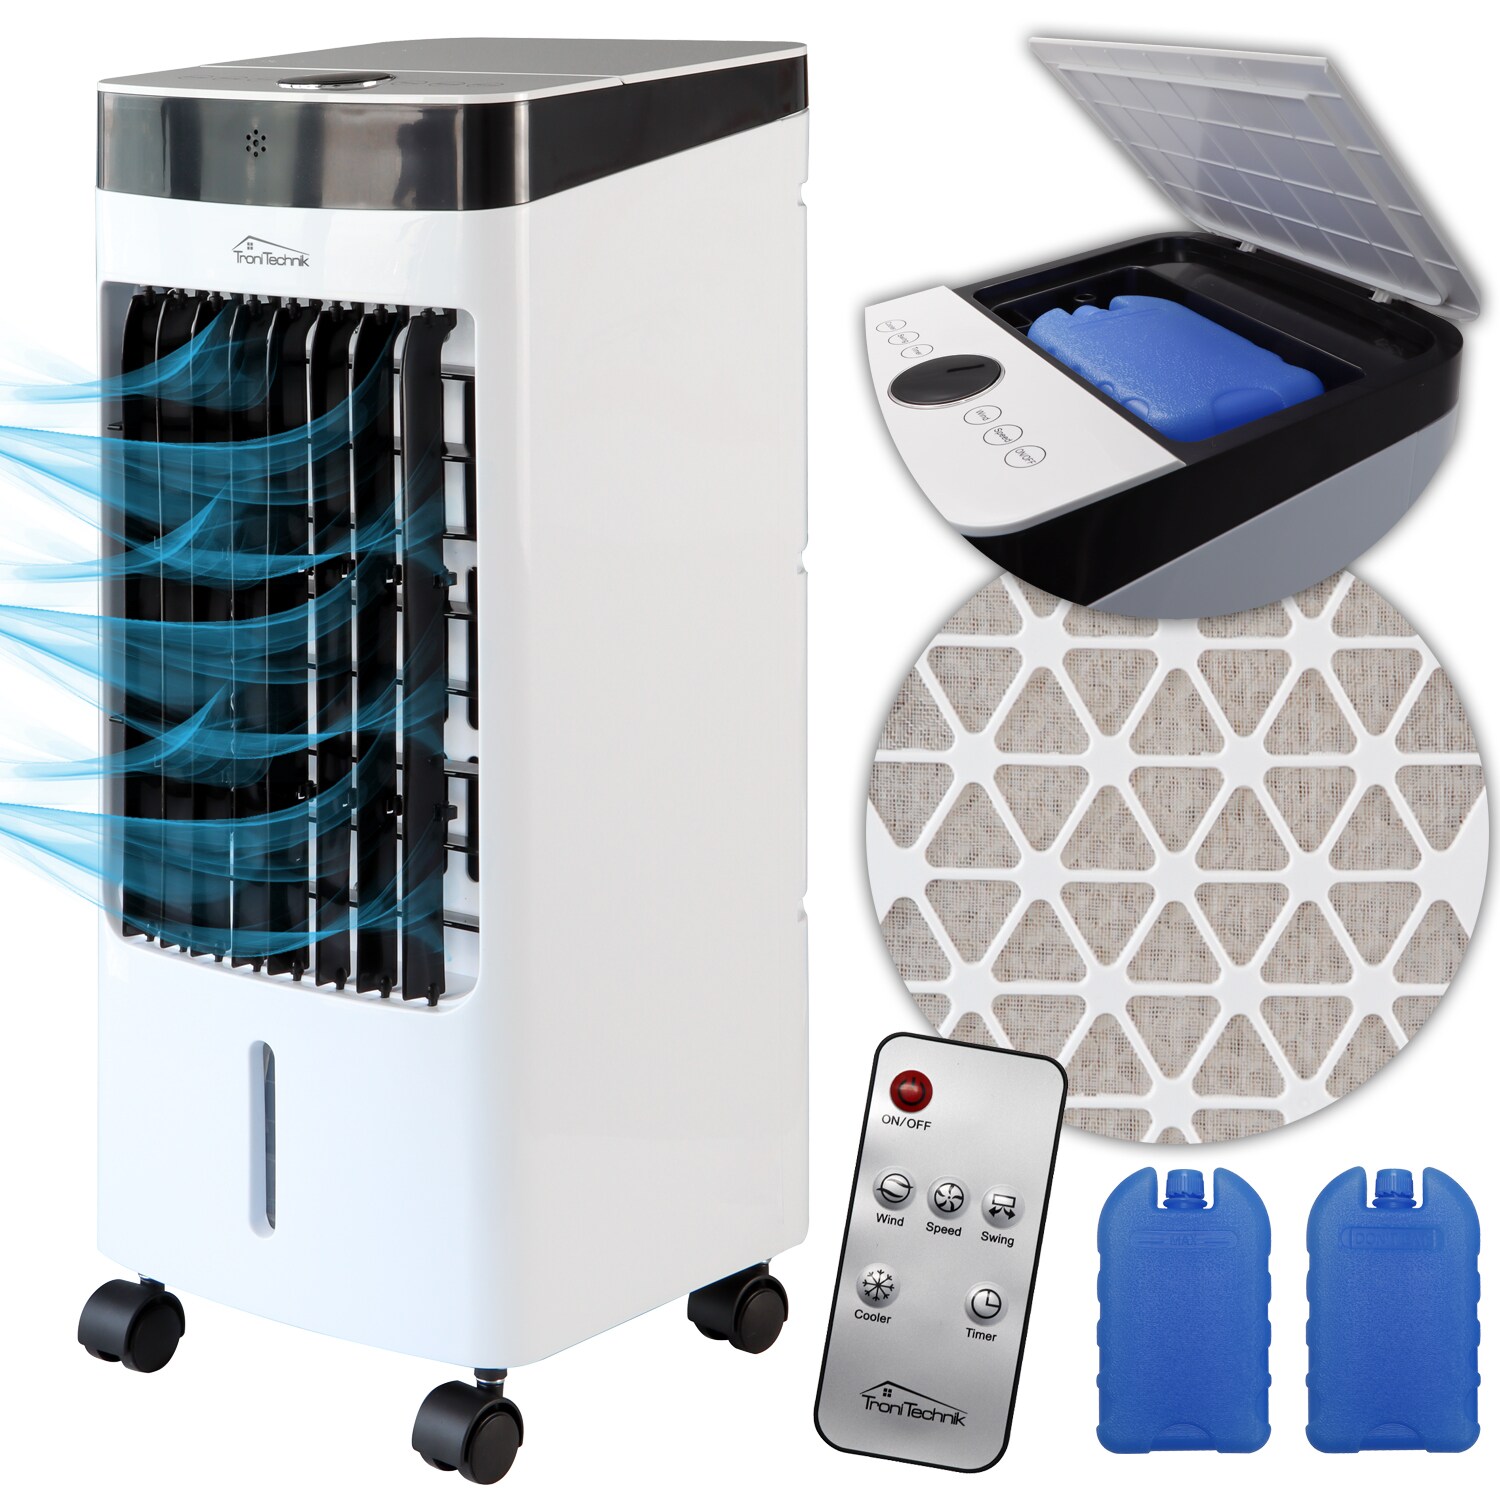 TroniTechnik® Mobiles Klimagerät 3in1 Klimaanlage Luftkühler LK04 Ventilator, inkl. Fernbedienung und Filter, 4in1 Kühle